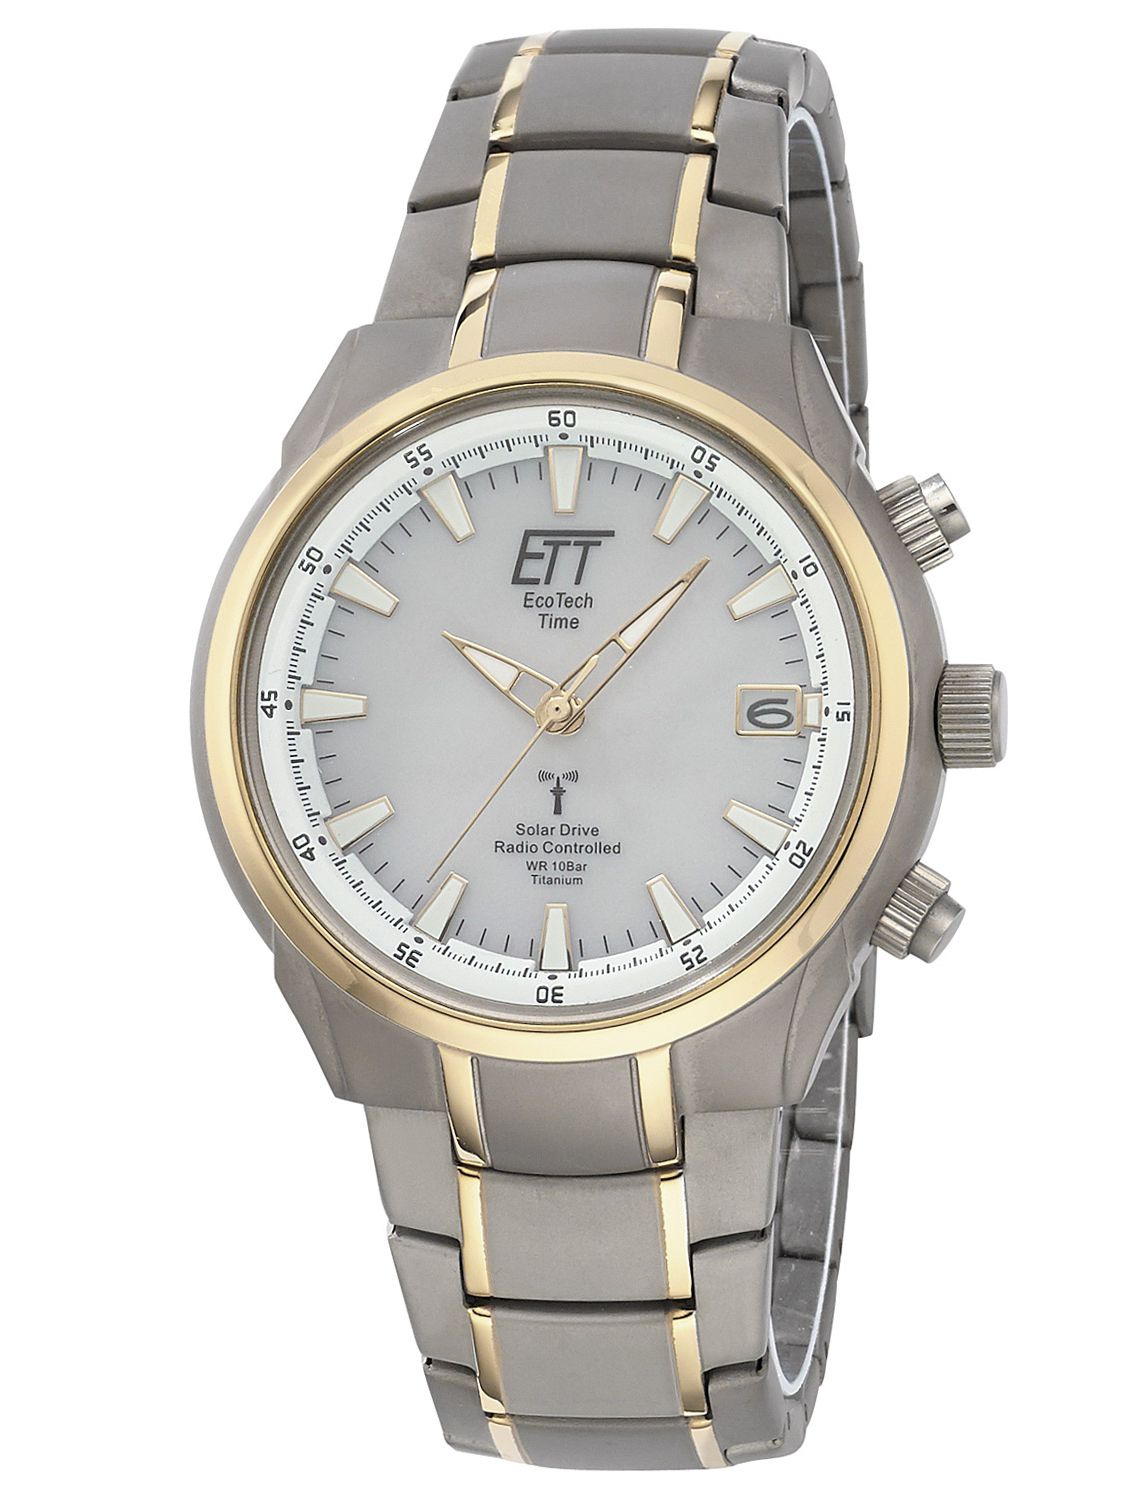 ETT Eco Tech Time II Drive Watch Mens uhrcenter EGT-11337-51M • RC Solar Aquanaut